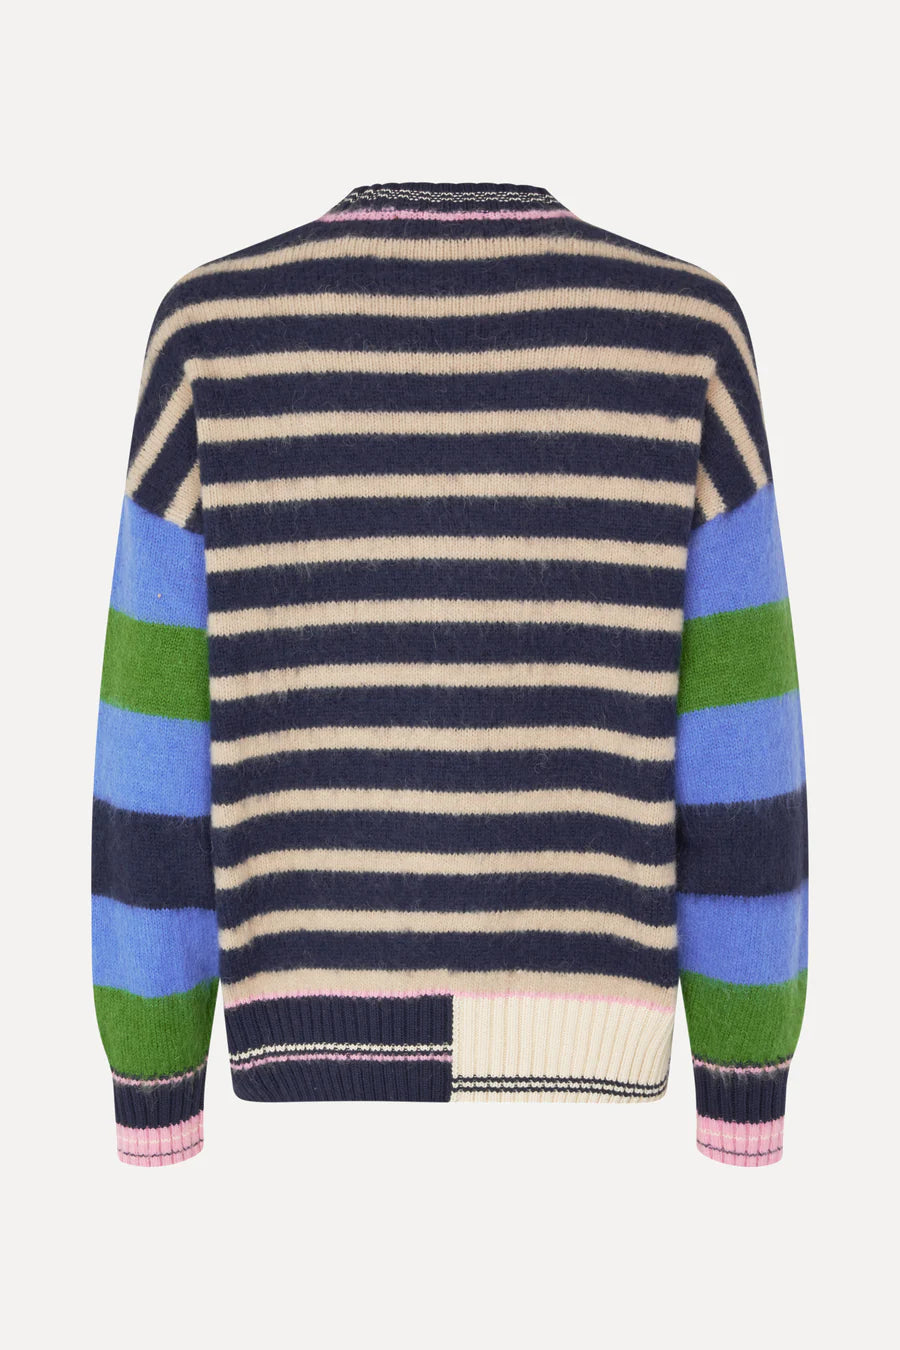 Shea Stripe Sweater